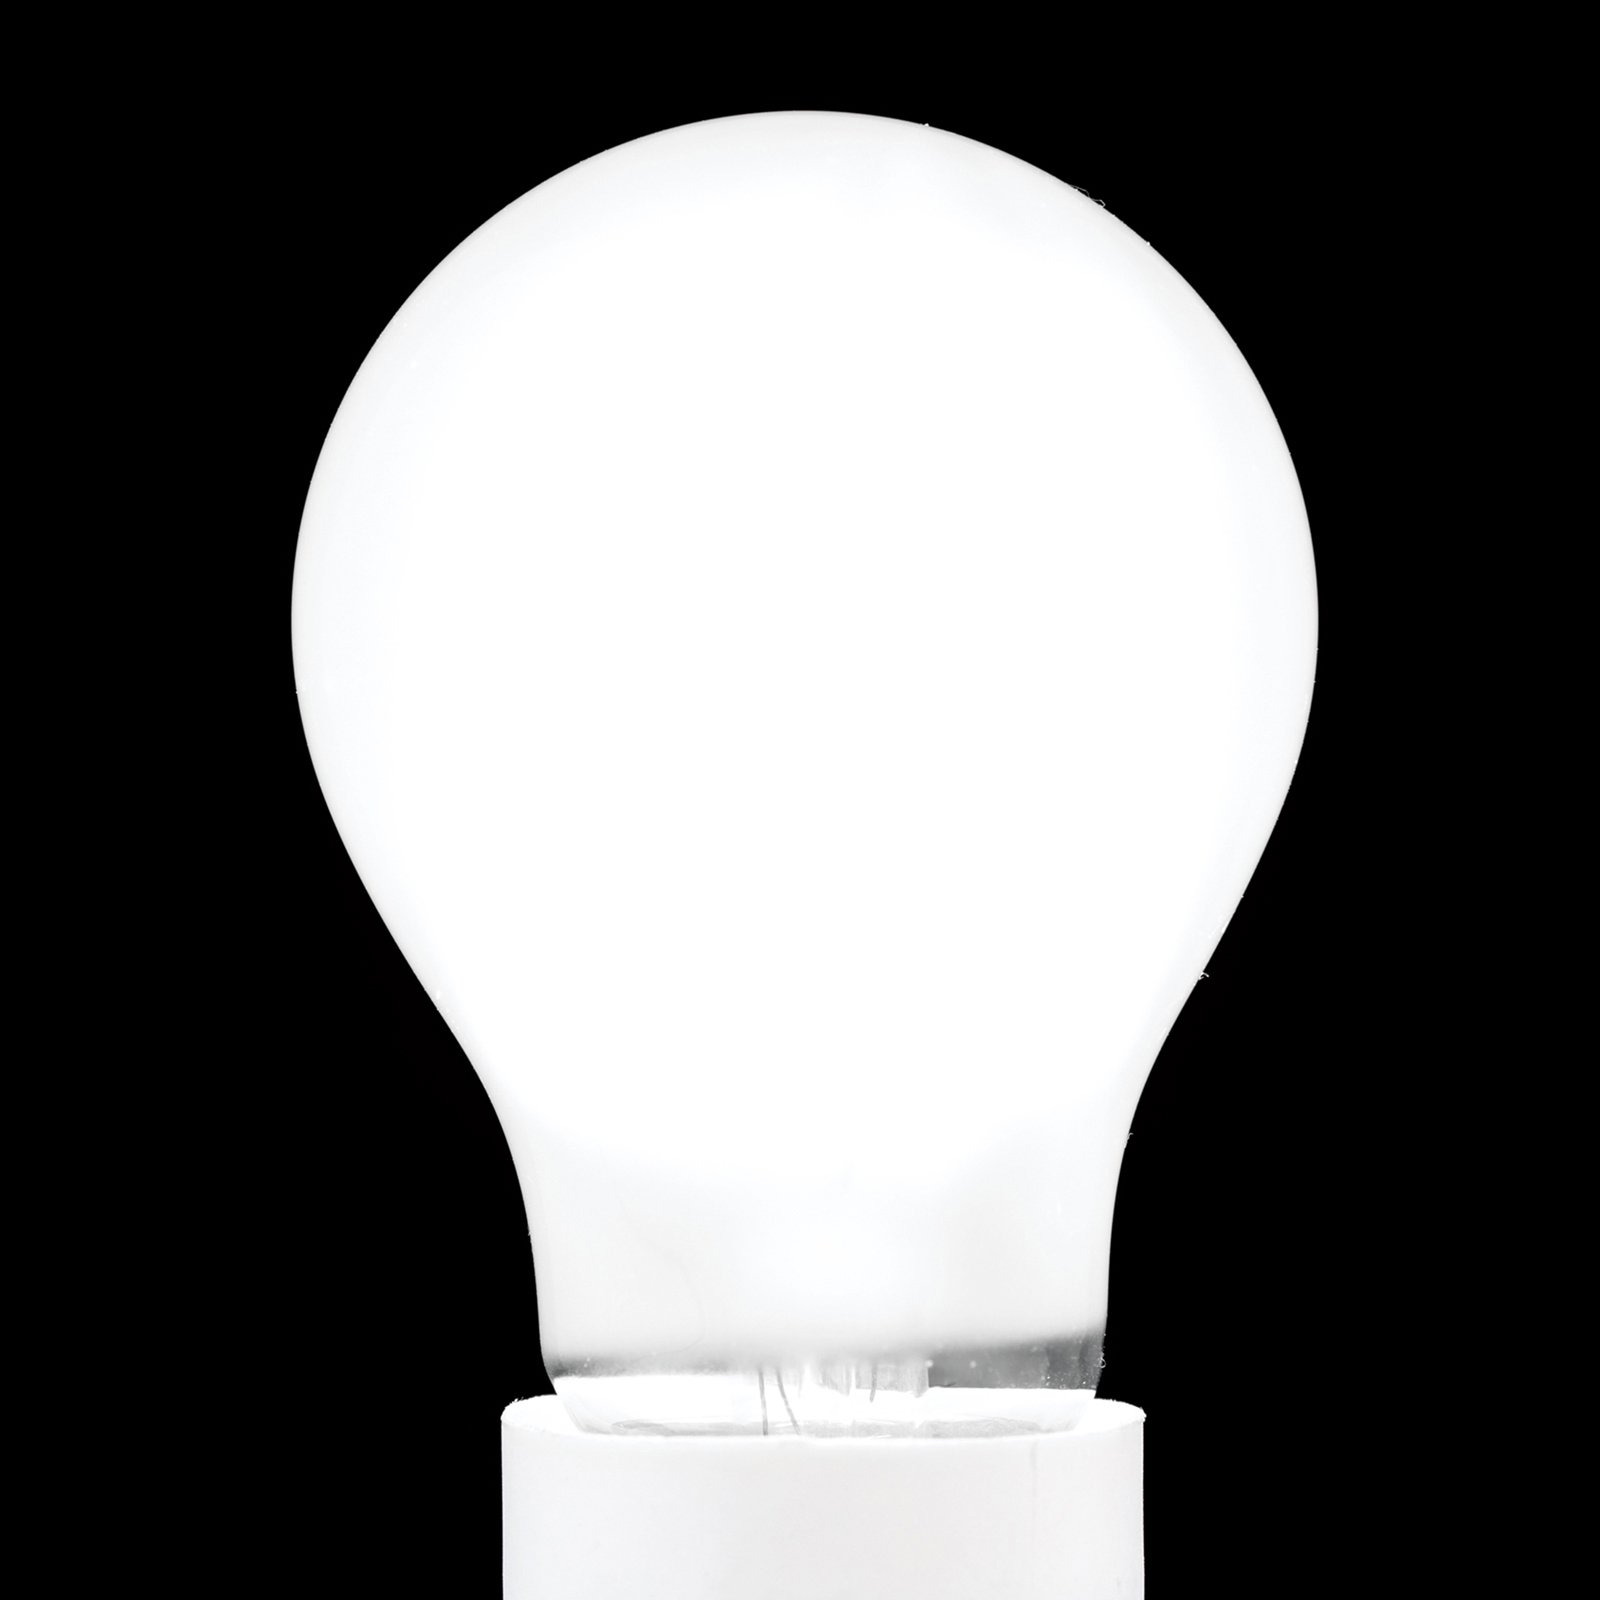 LED bulb E27 4.5 W 2,700 K matt, dimmable